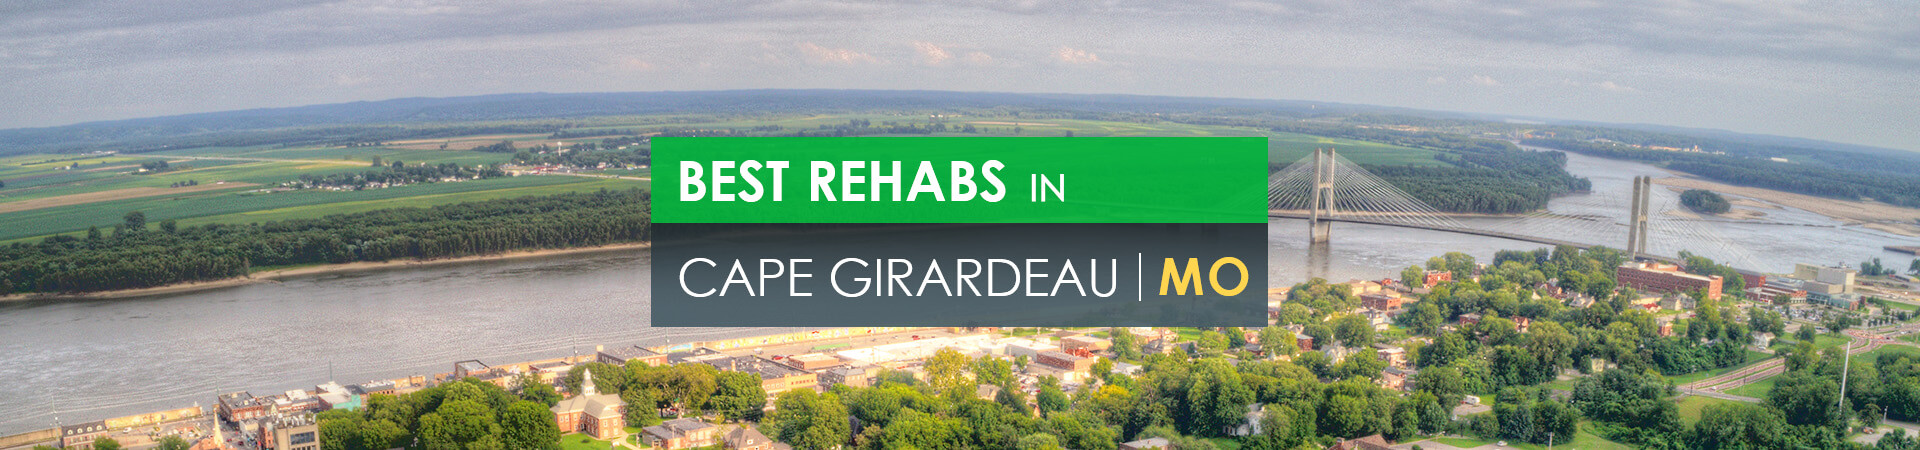 Best rehabs in Cape Girardeau, MO